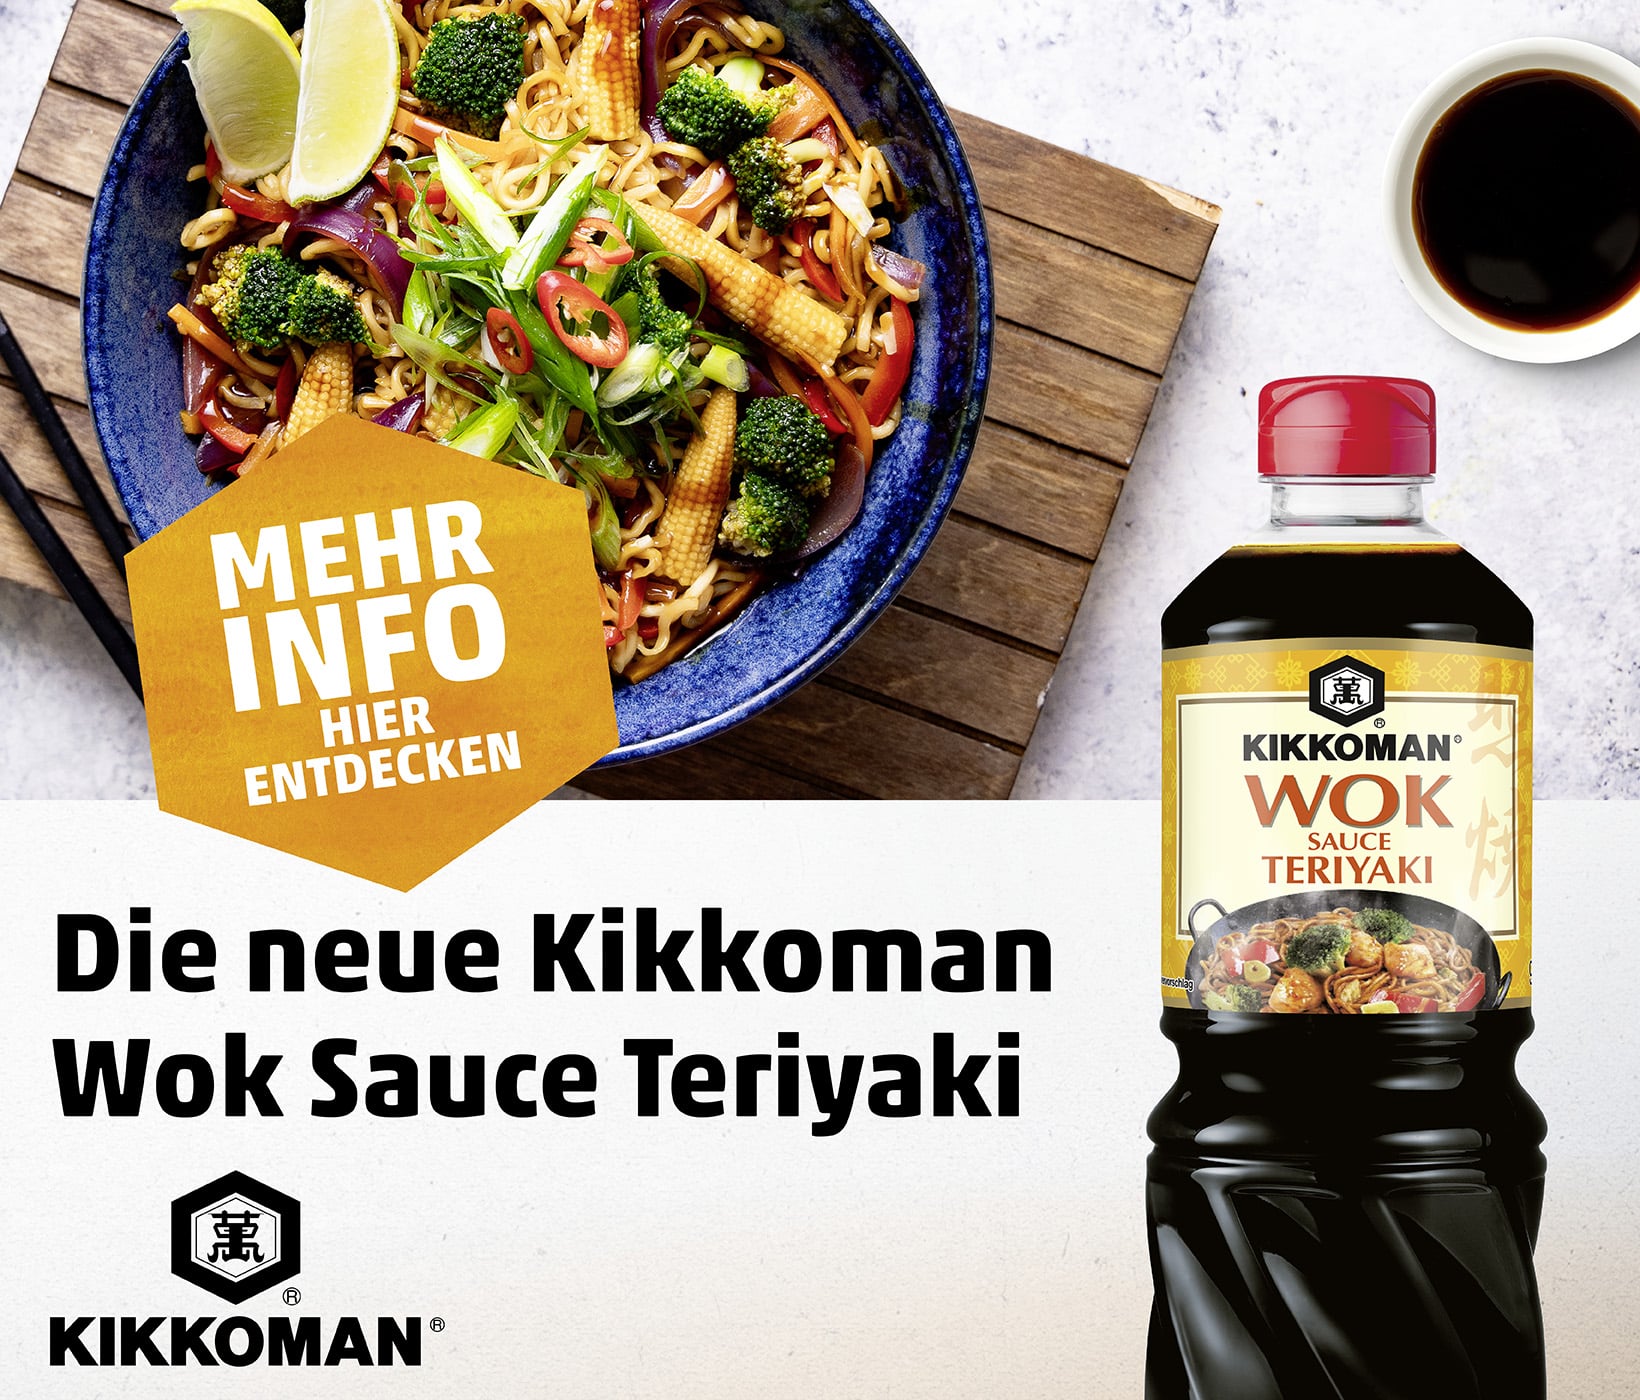 Develey Foodservice Kikkoman Wok Sauce Teriyaki Webbanner 1640x1400 LO3a